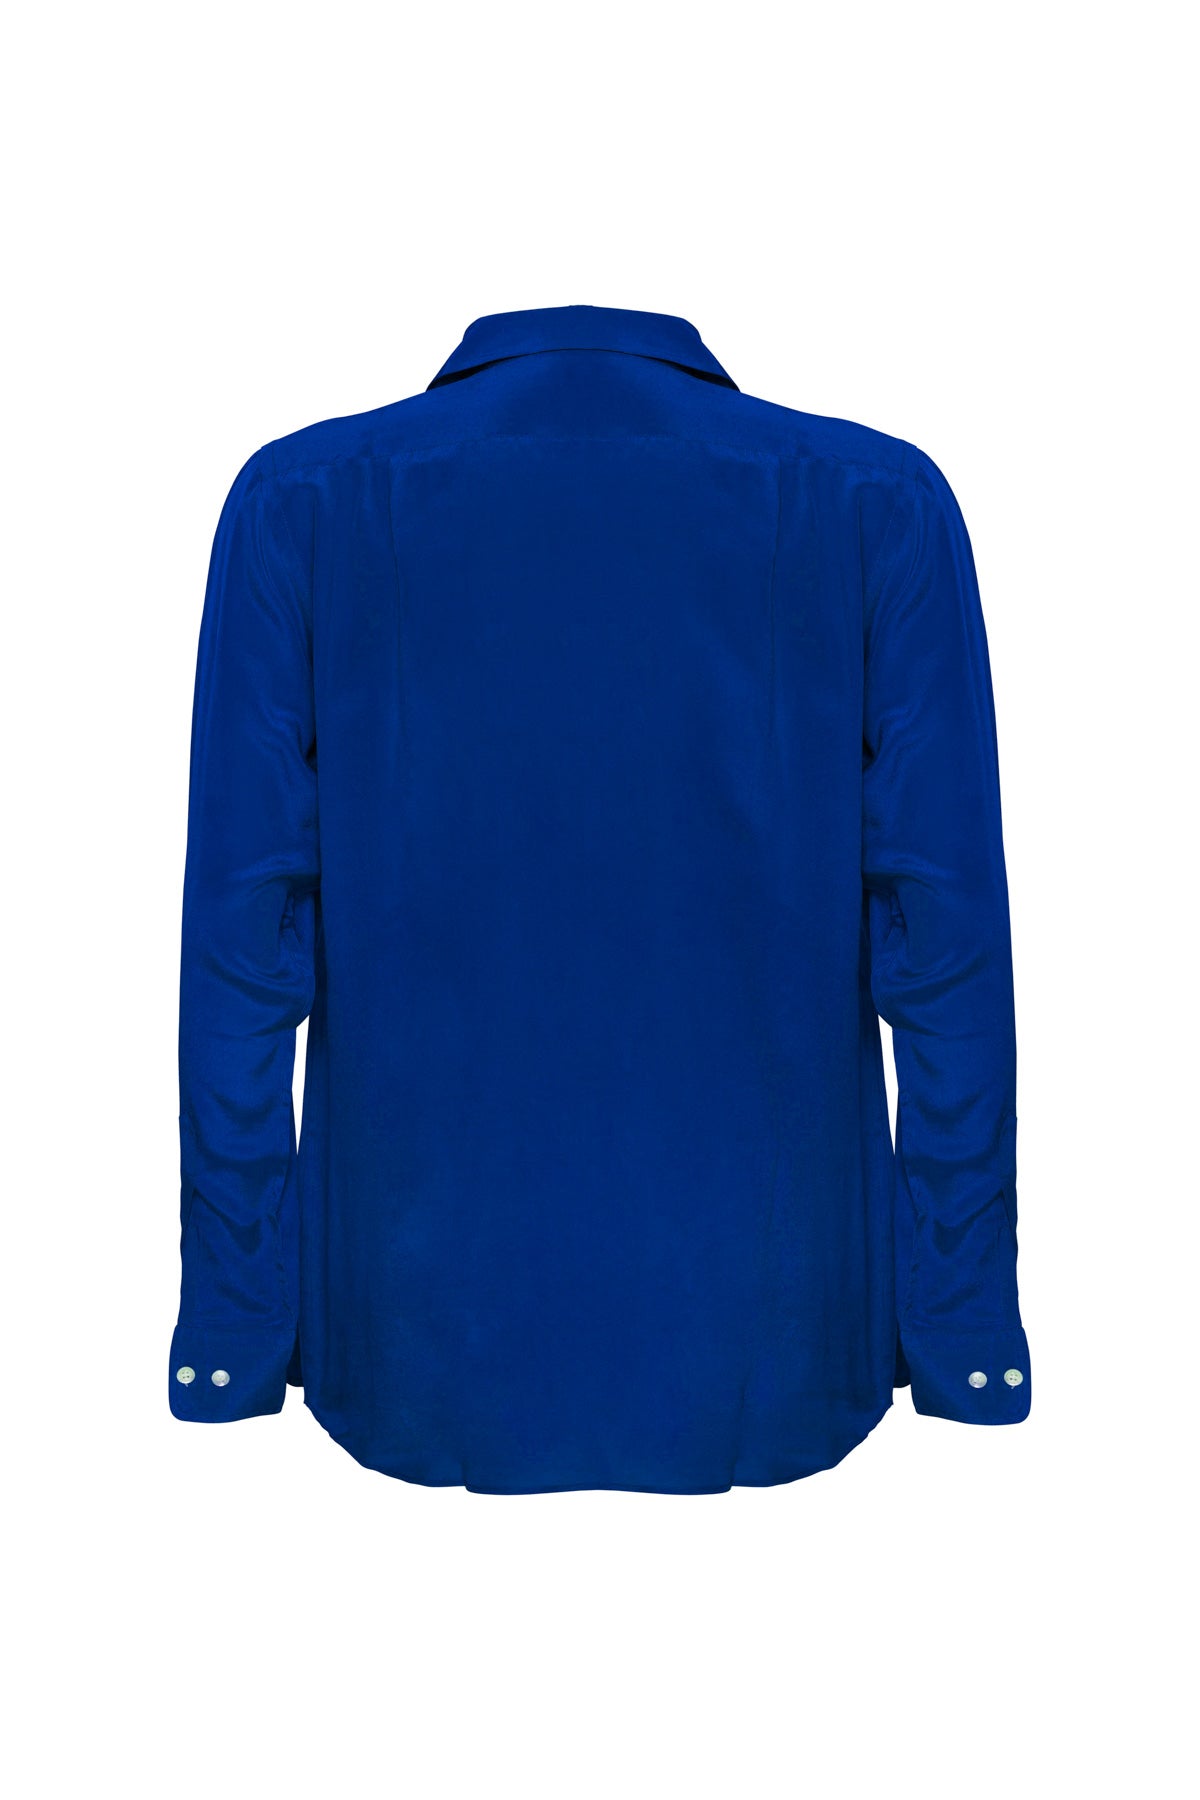 Men's Silk Cowboy Shirt - Bright Blue